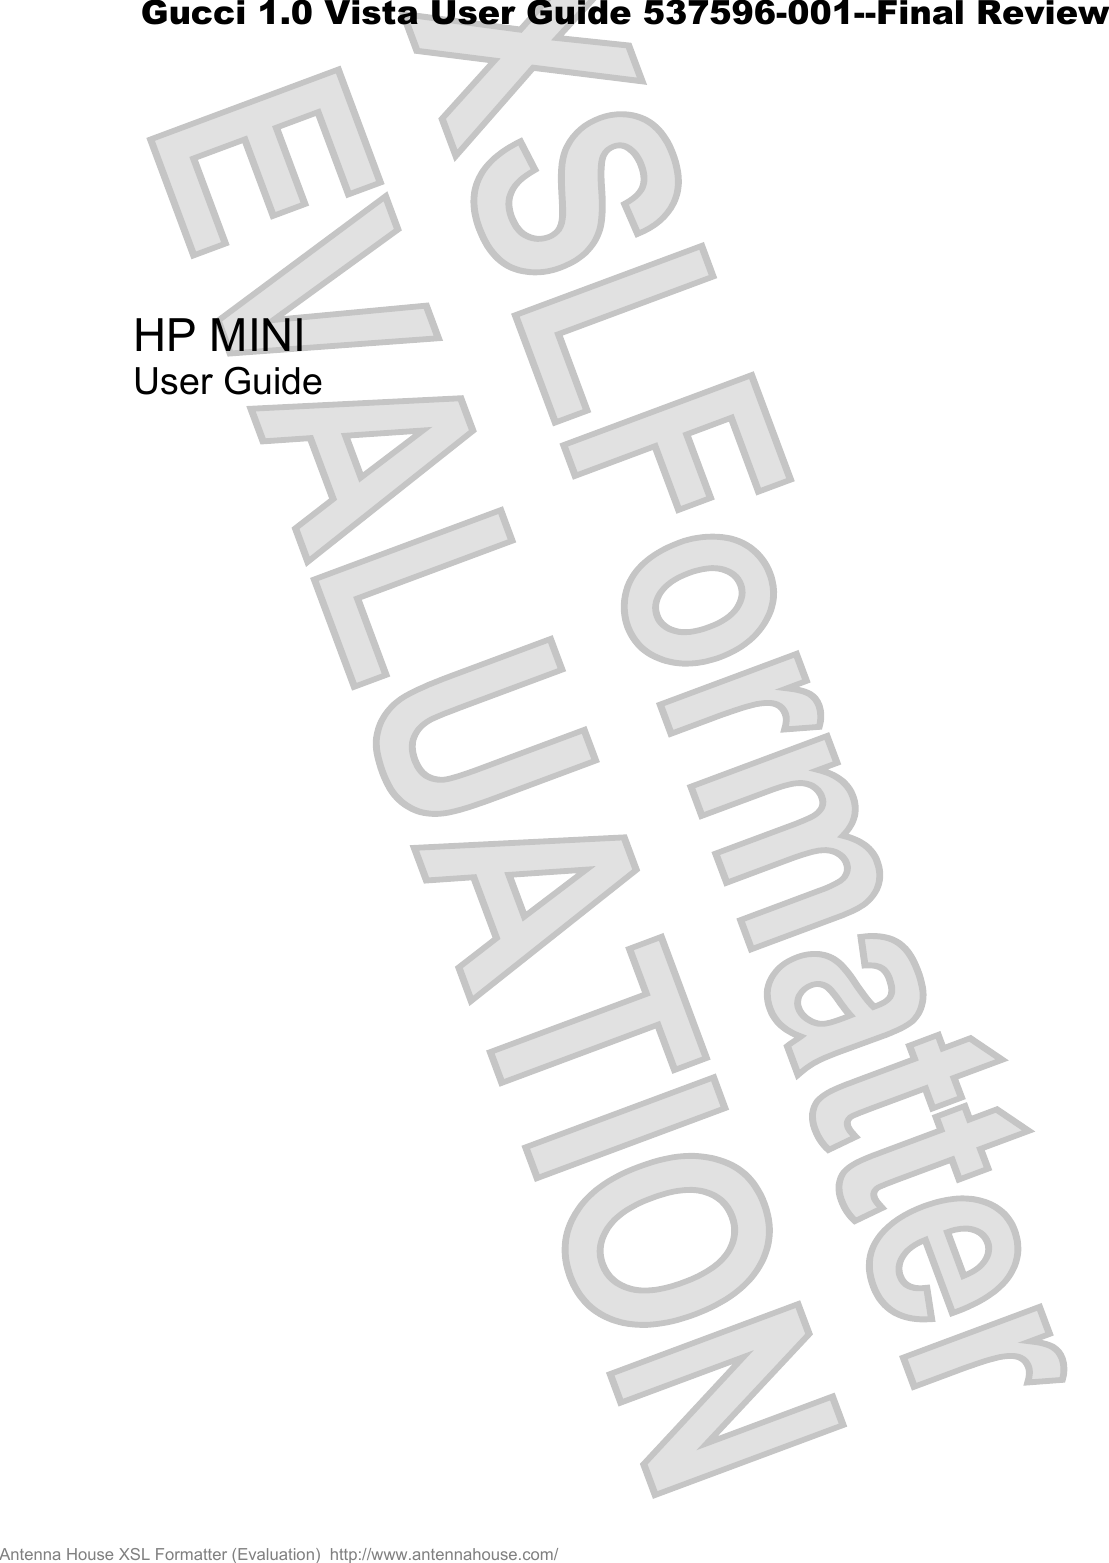 HP MINIUser GuideAntenna House XSL Formatter (Evaluation)  http://www.antennahouse.com/Gucci 1.0 Vista User Guide 537596-001--Final Review